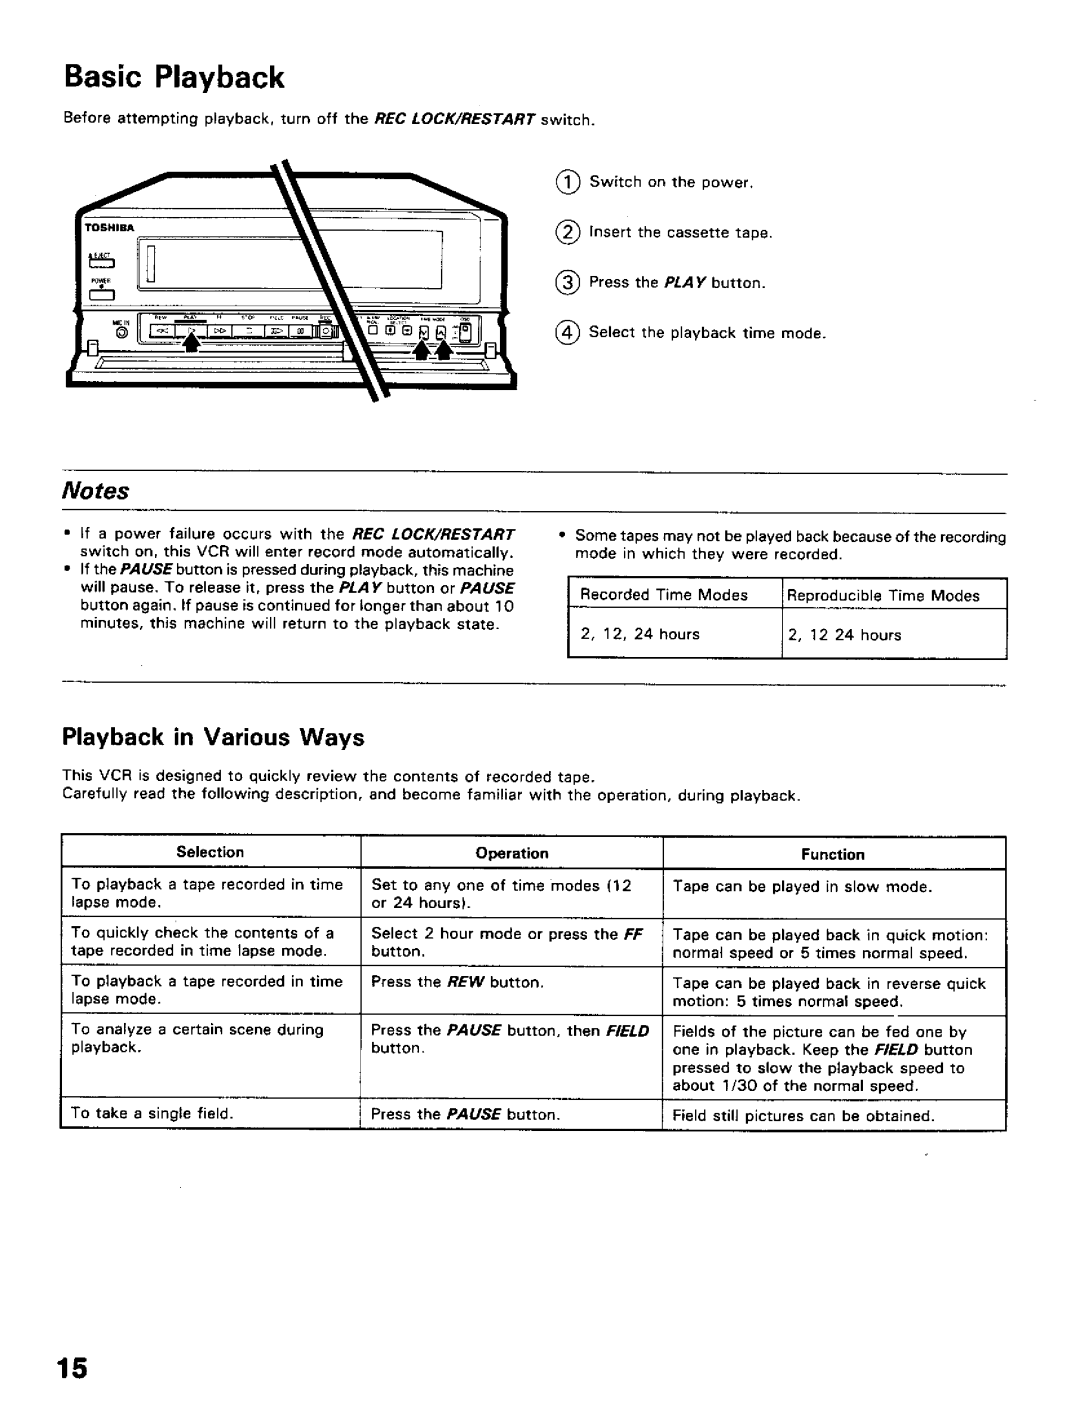 Toshiba KV-5024A manual 